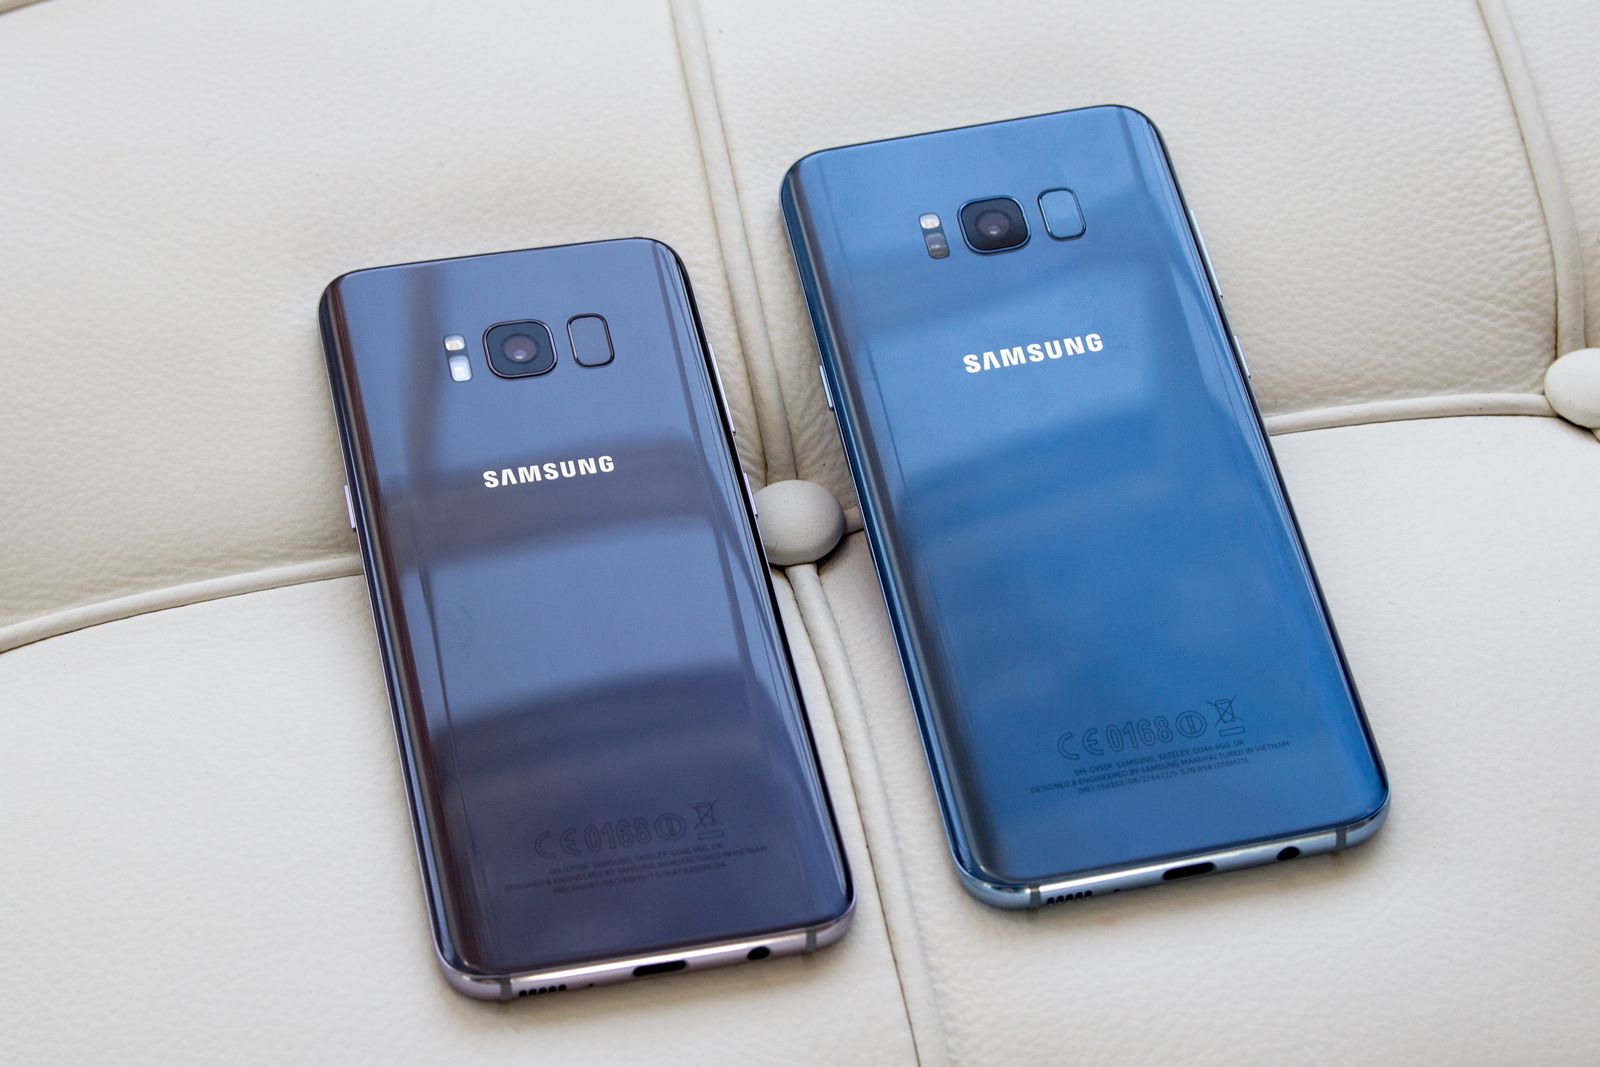 Samsung Galaxy S8 Mini image 1